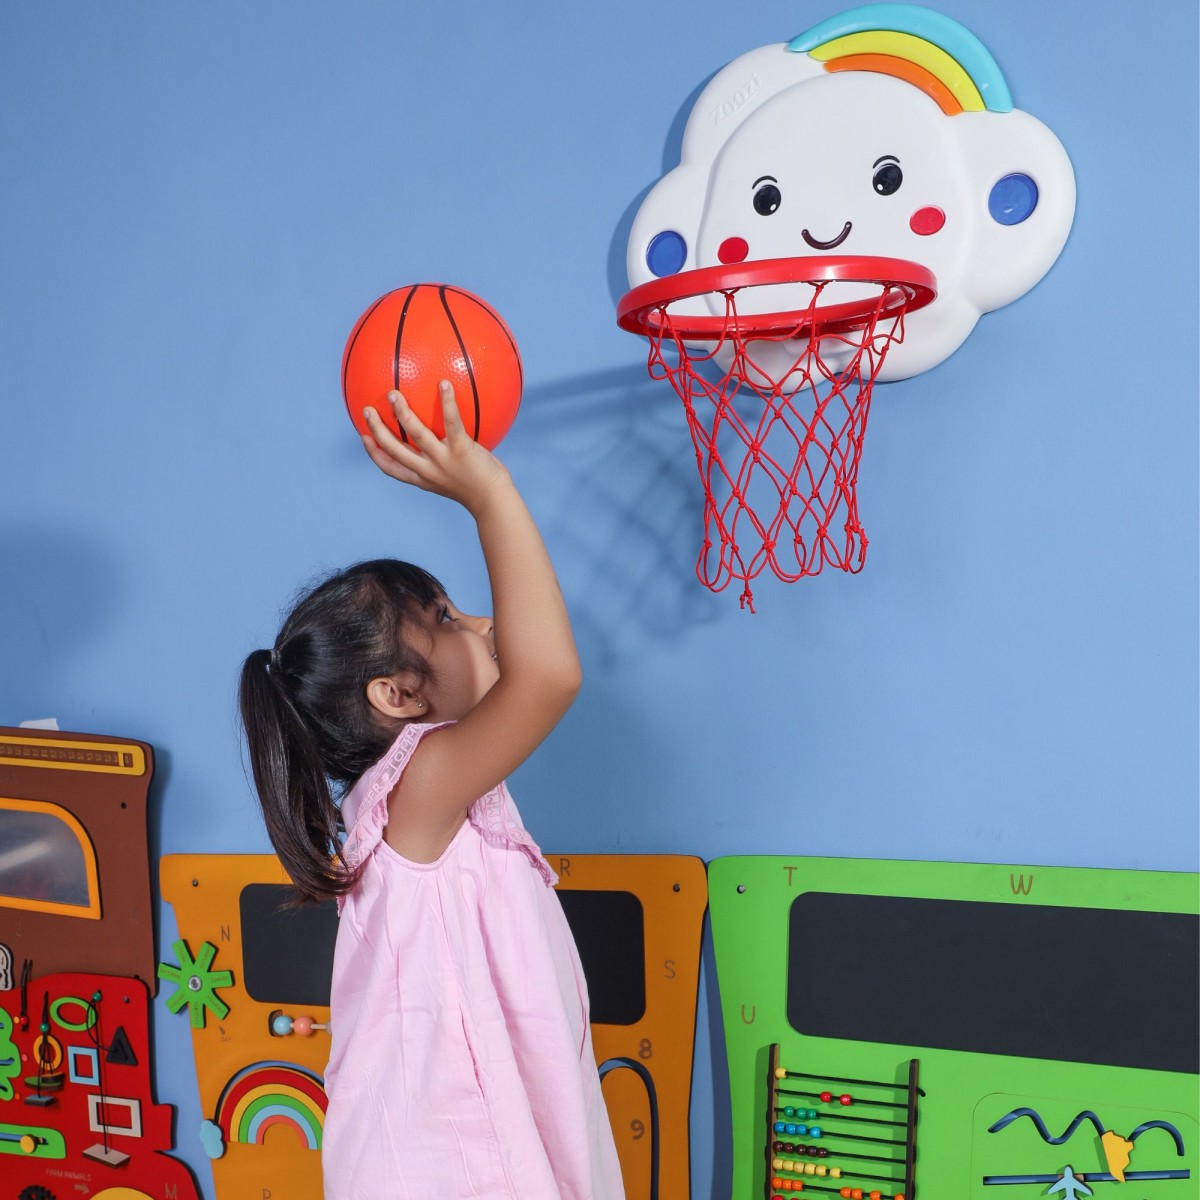 Zoozi Basket Ball Wall Mounted Basketball Hoop Set, Multicolour, Indoor Basketball Hoop for Kids & Adults, 36M+